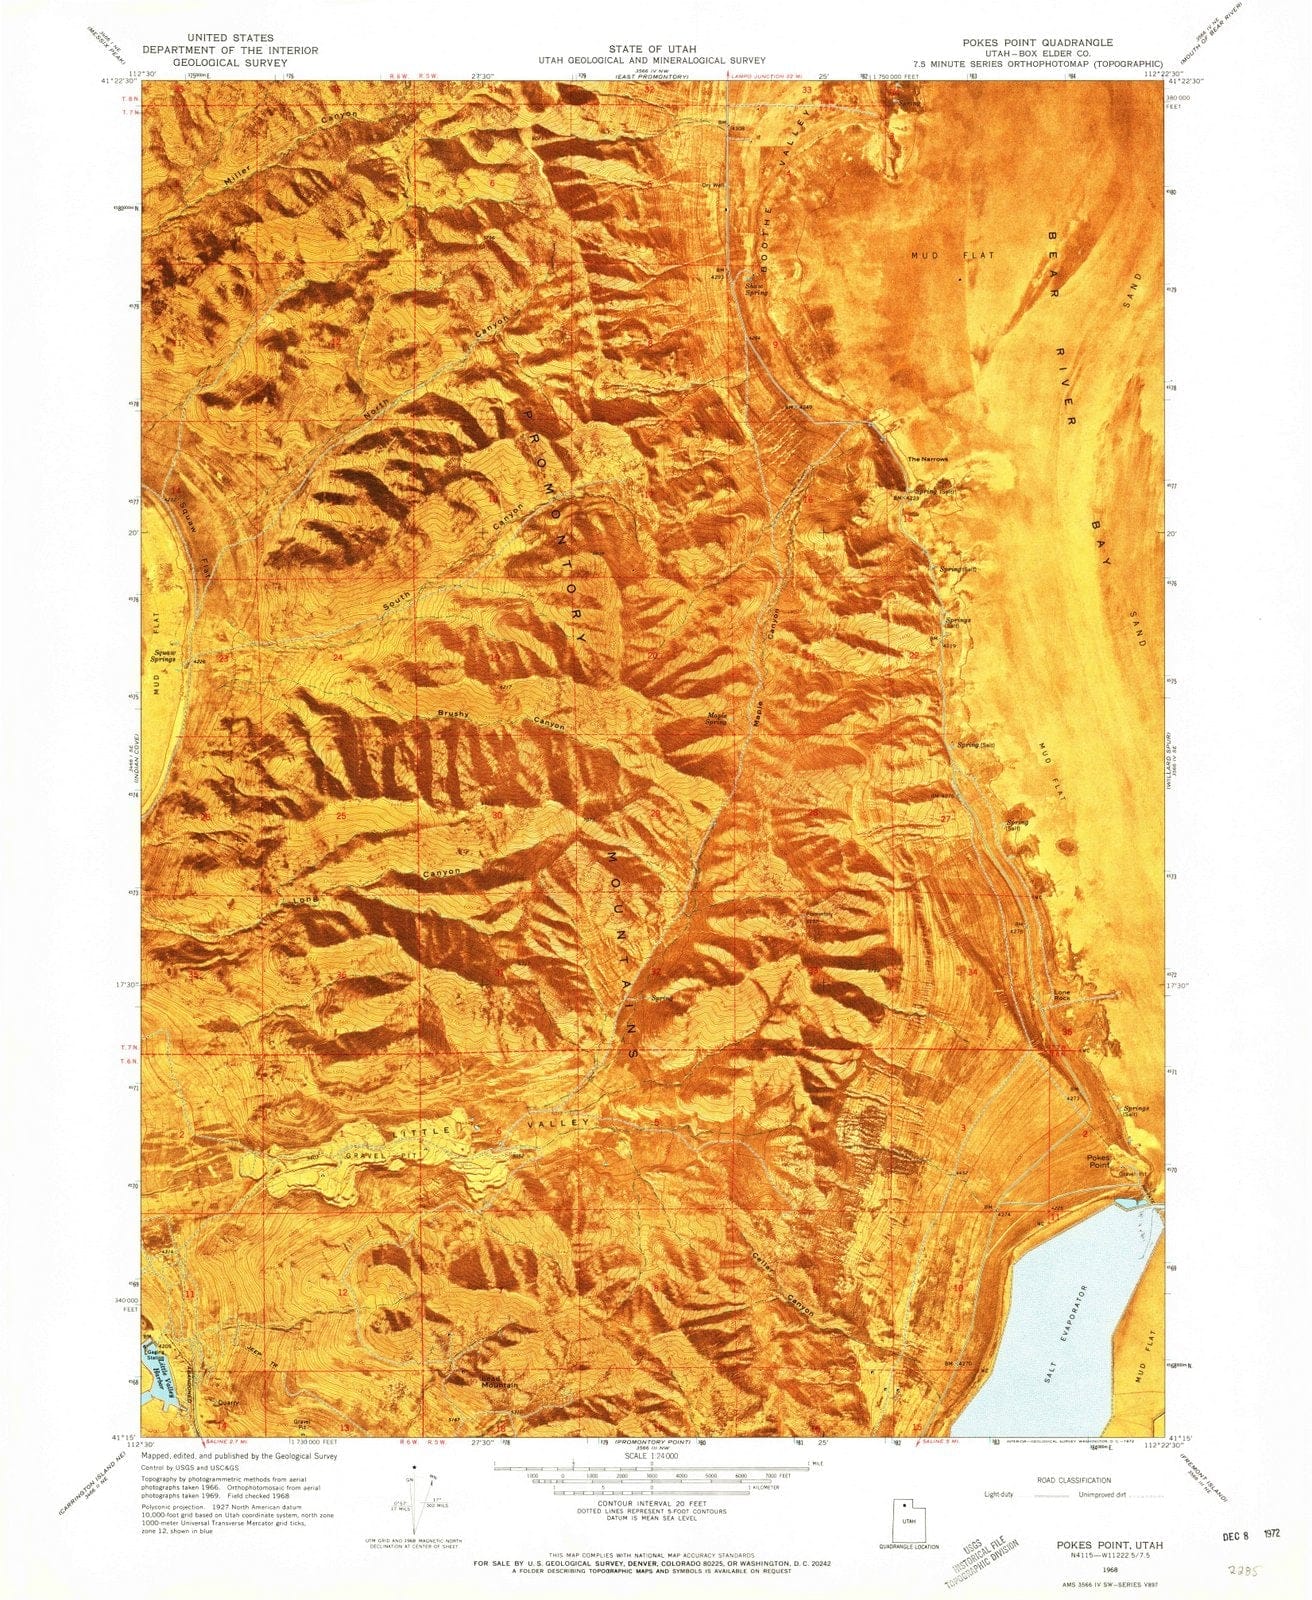 1968 Pokes Point, UT - Utah - USGS Topographic Map